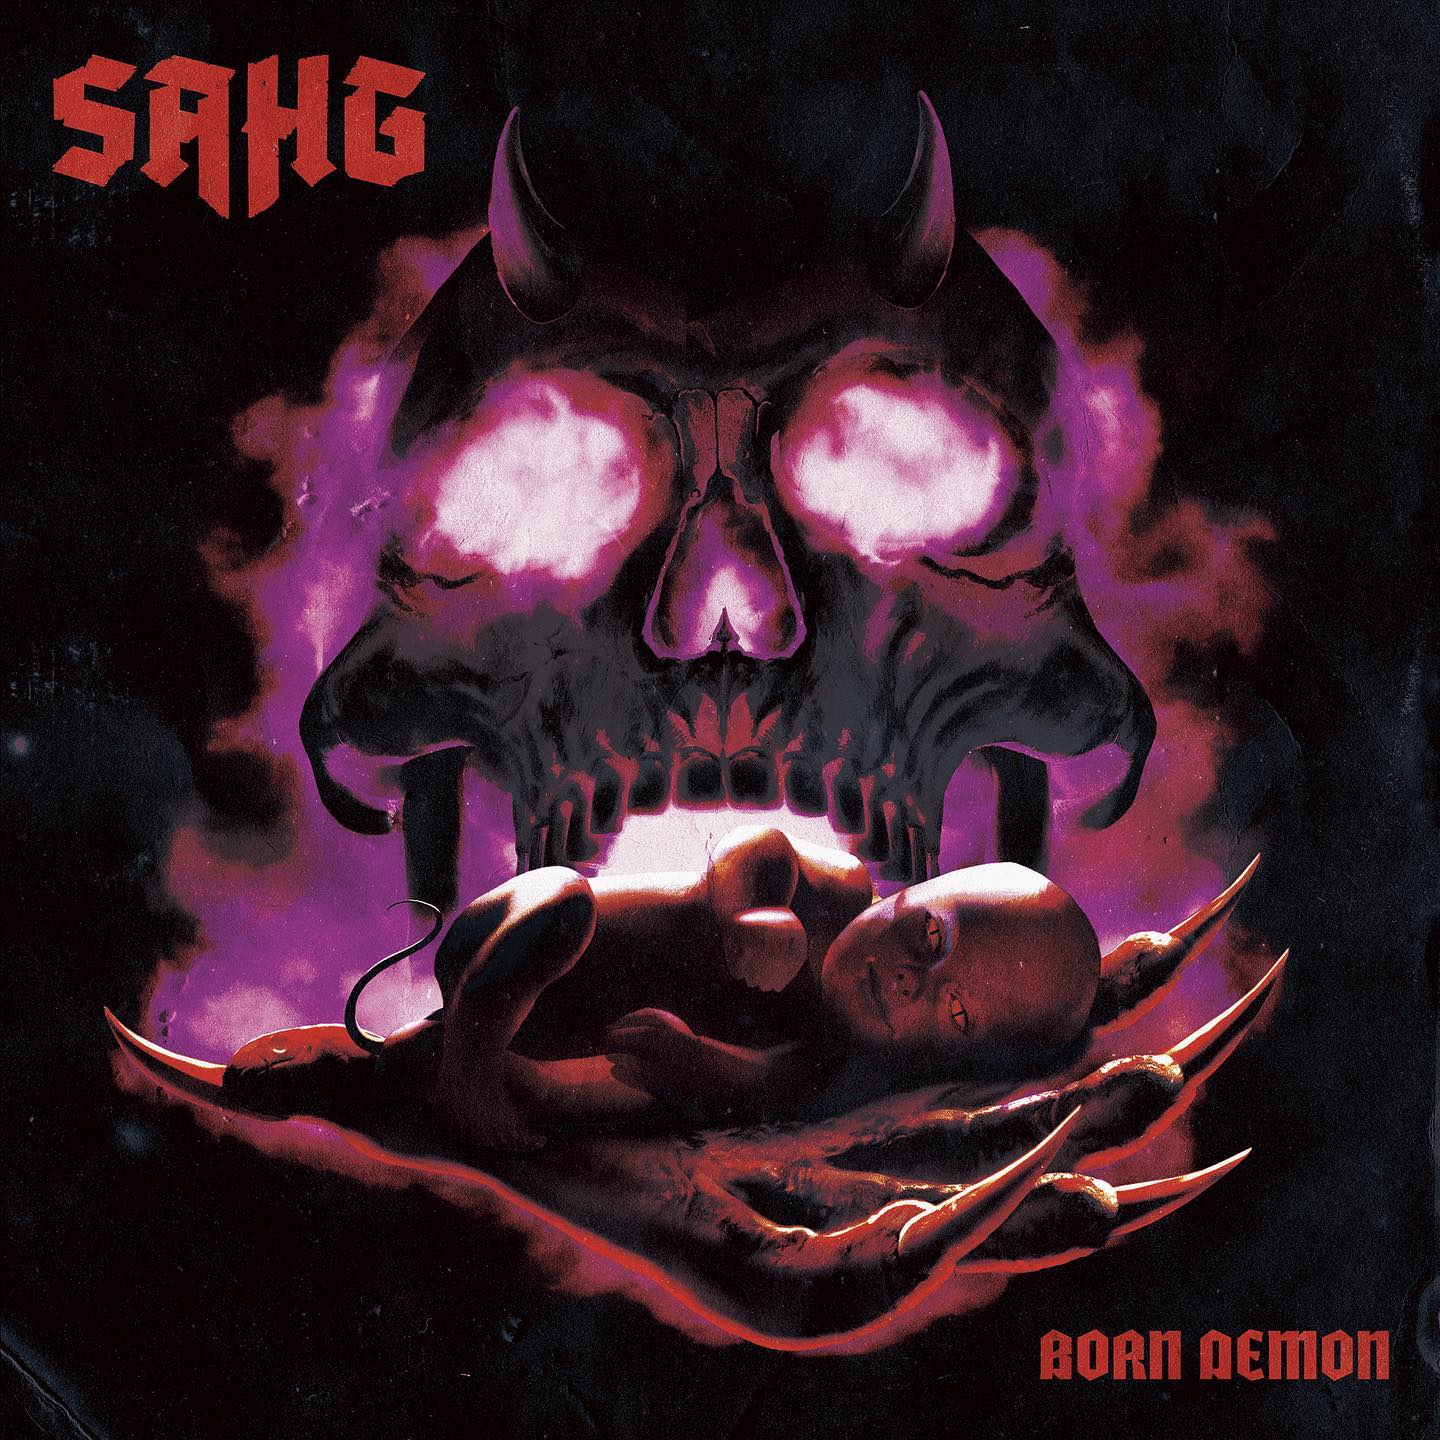 sahg - born demon